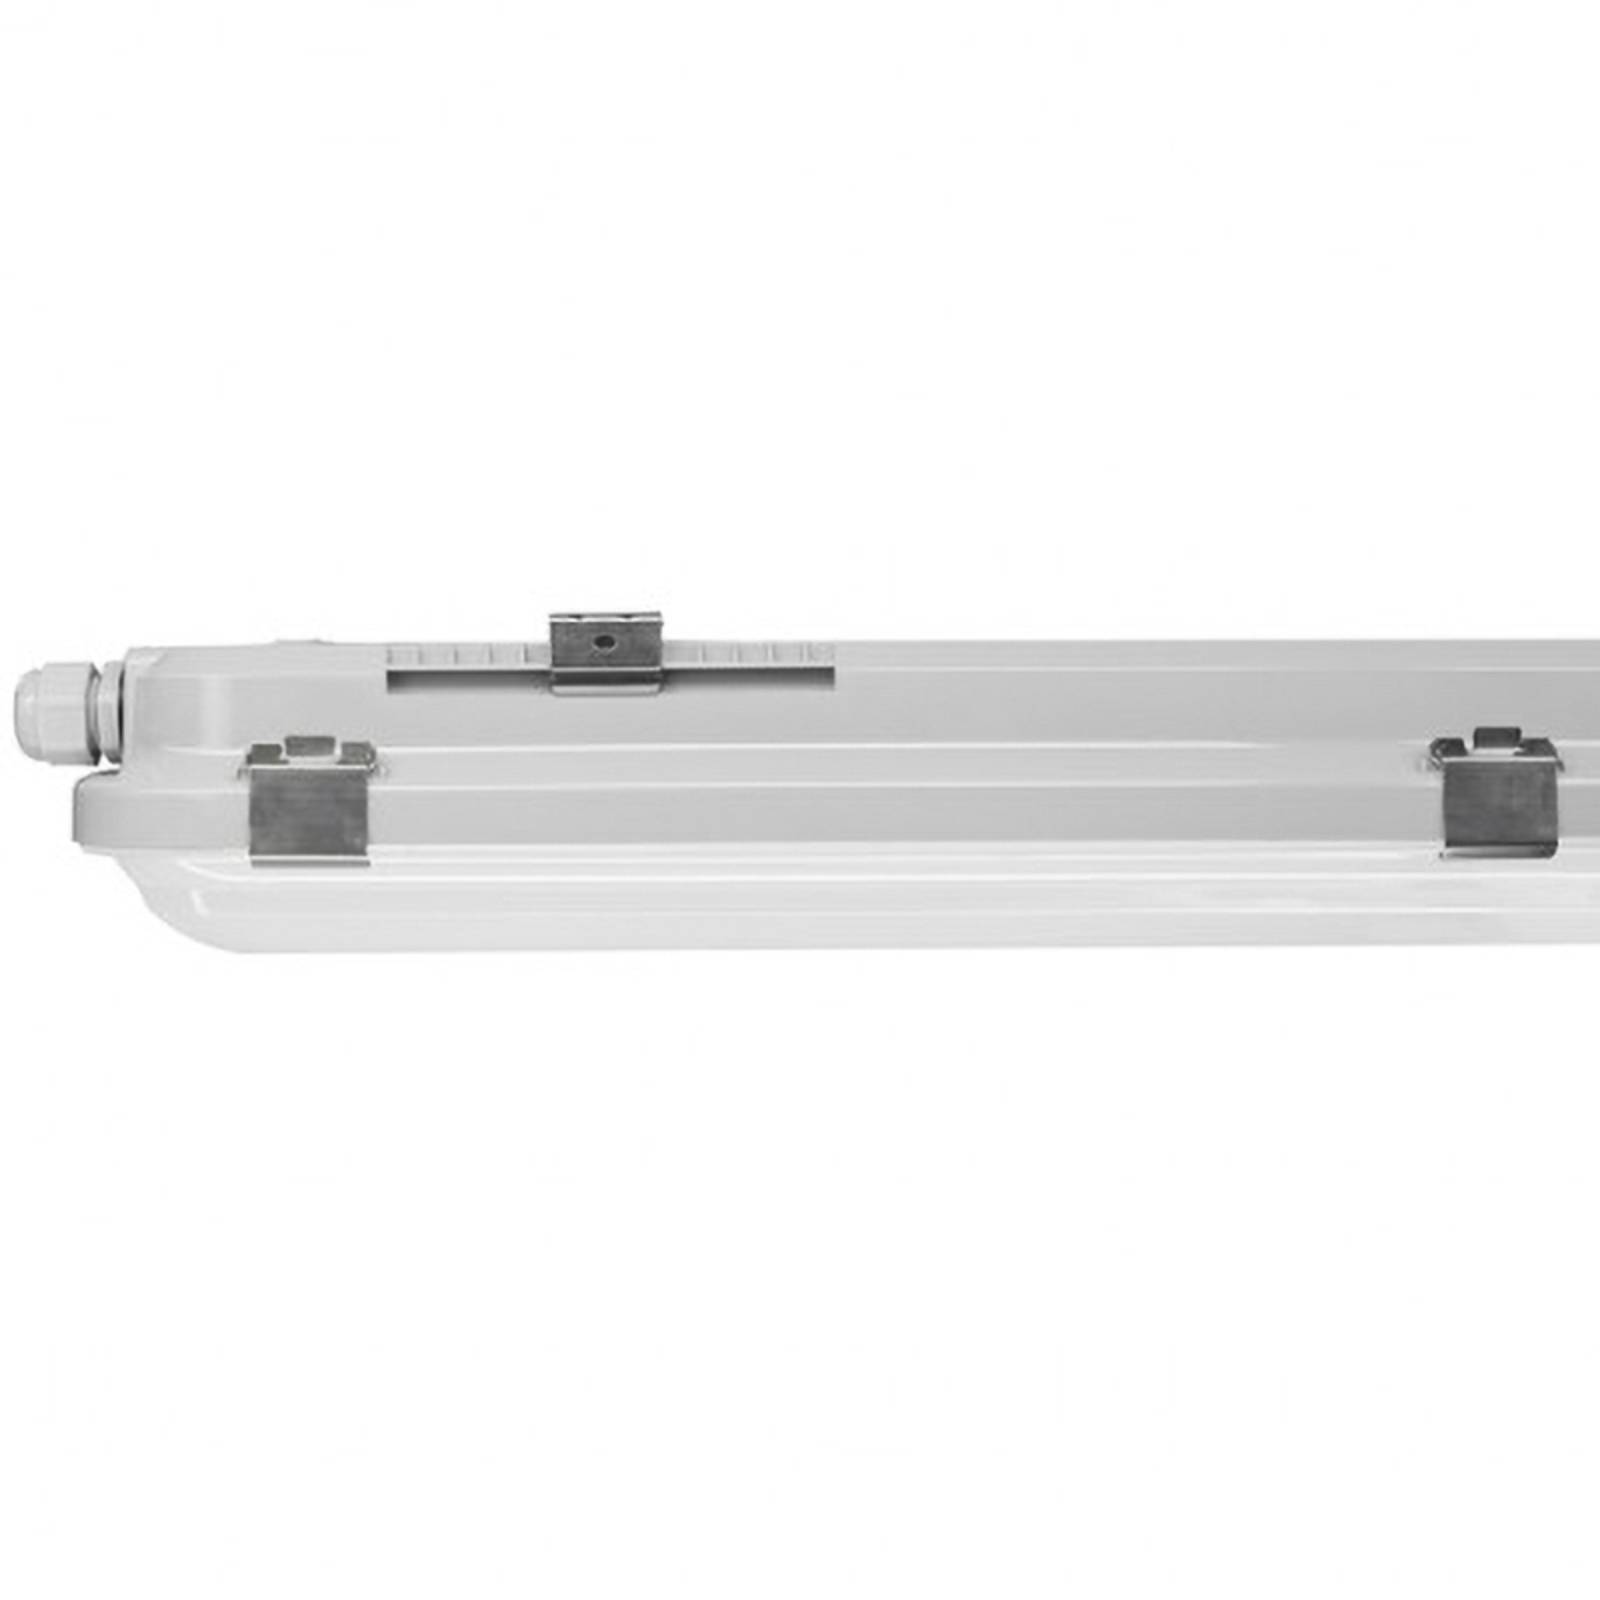 InnoGreen AQUOS 3.0 BASELine LED-lampa 67cm 840